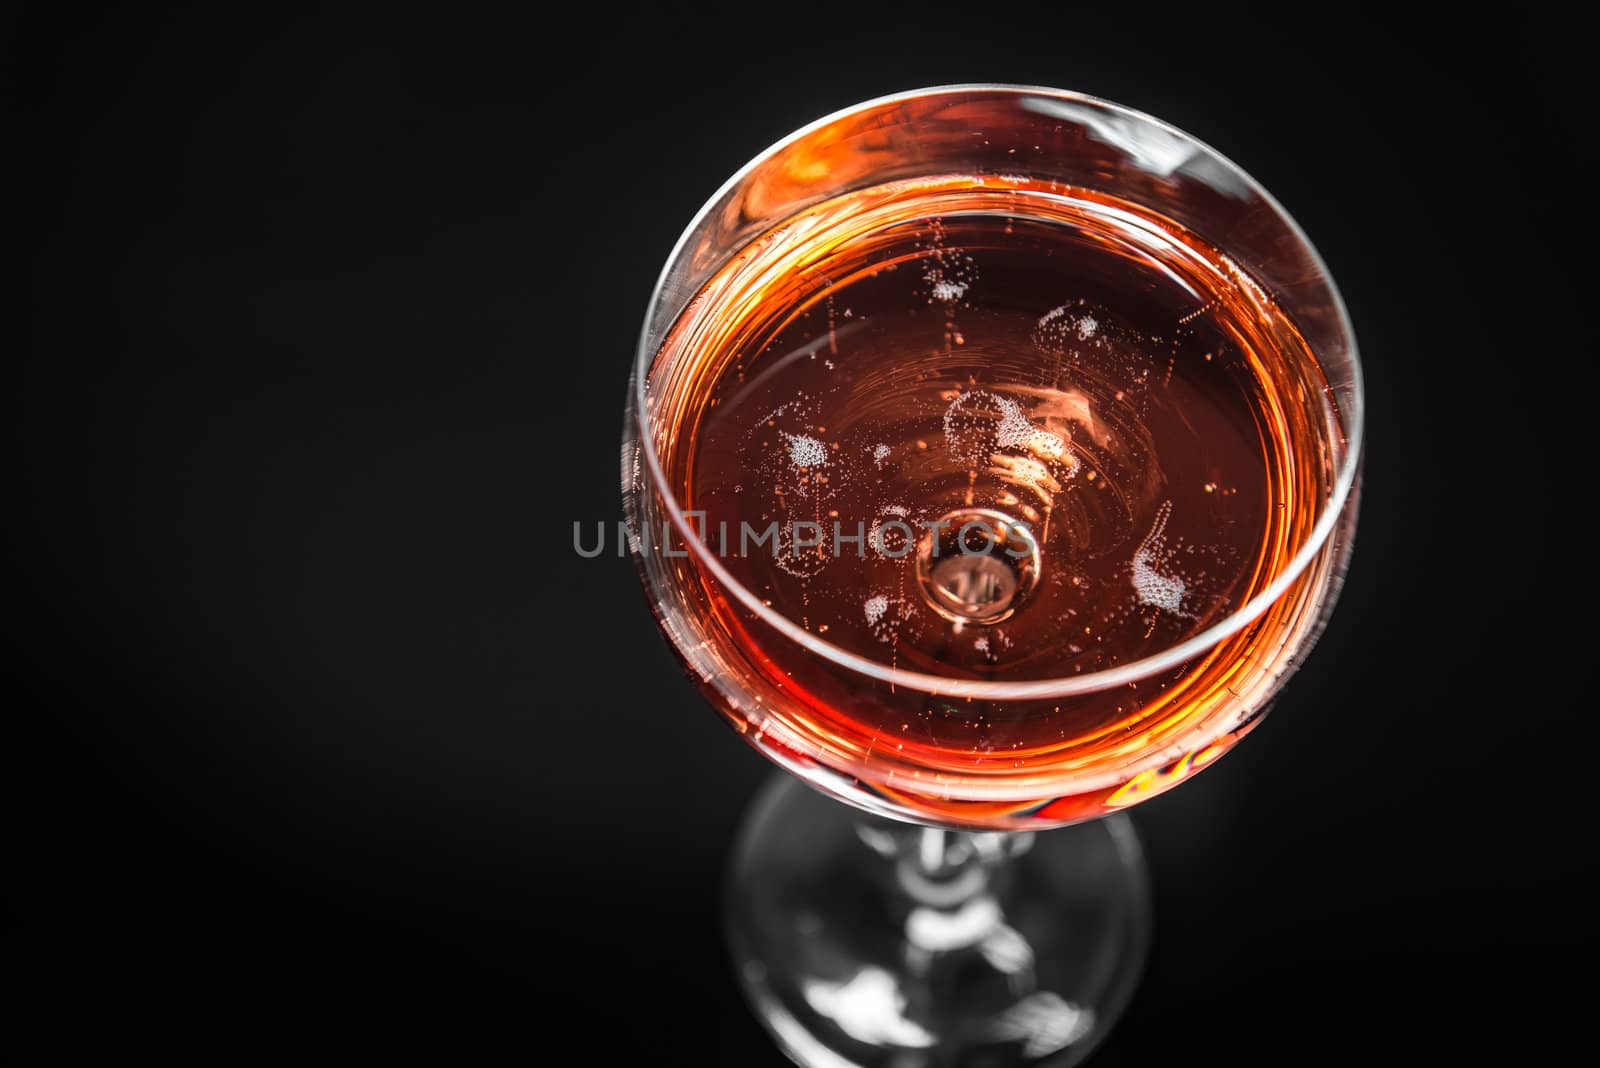 Wine in glass by jjgerber